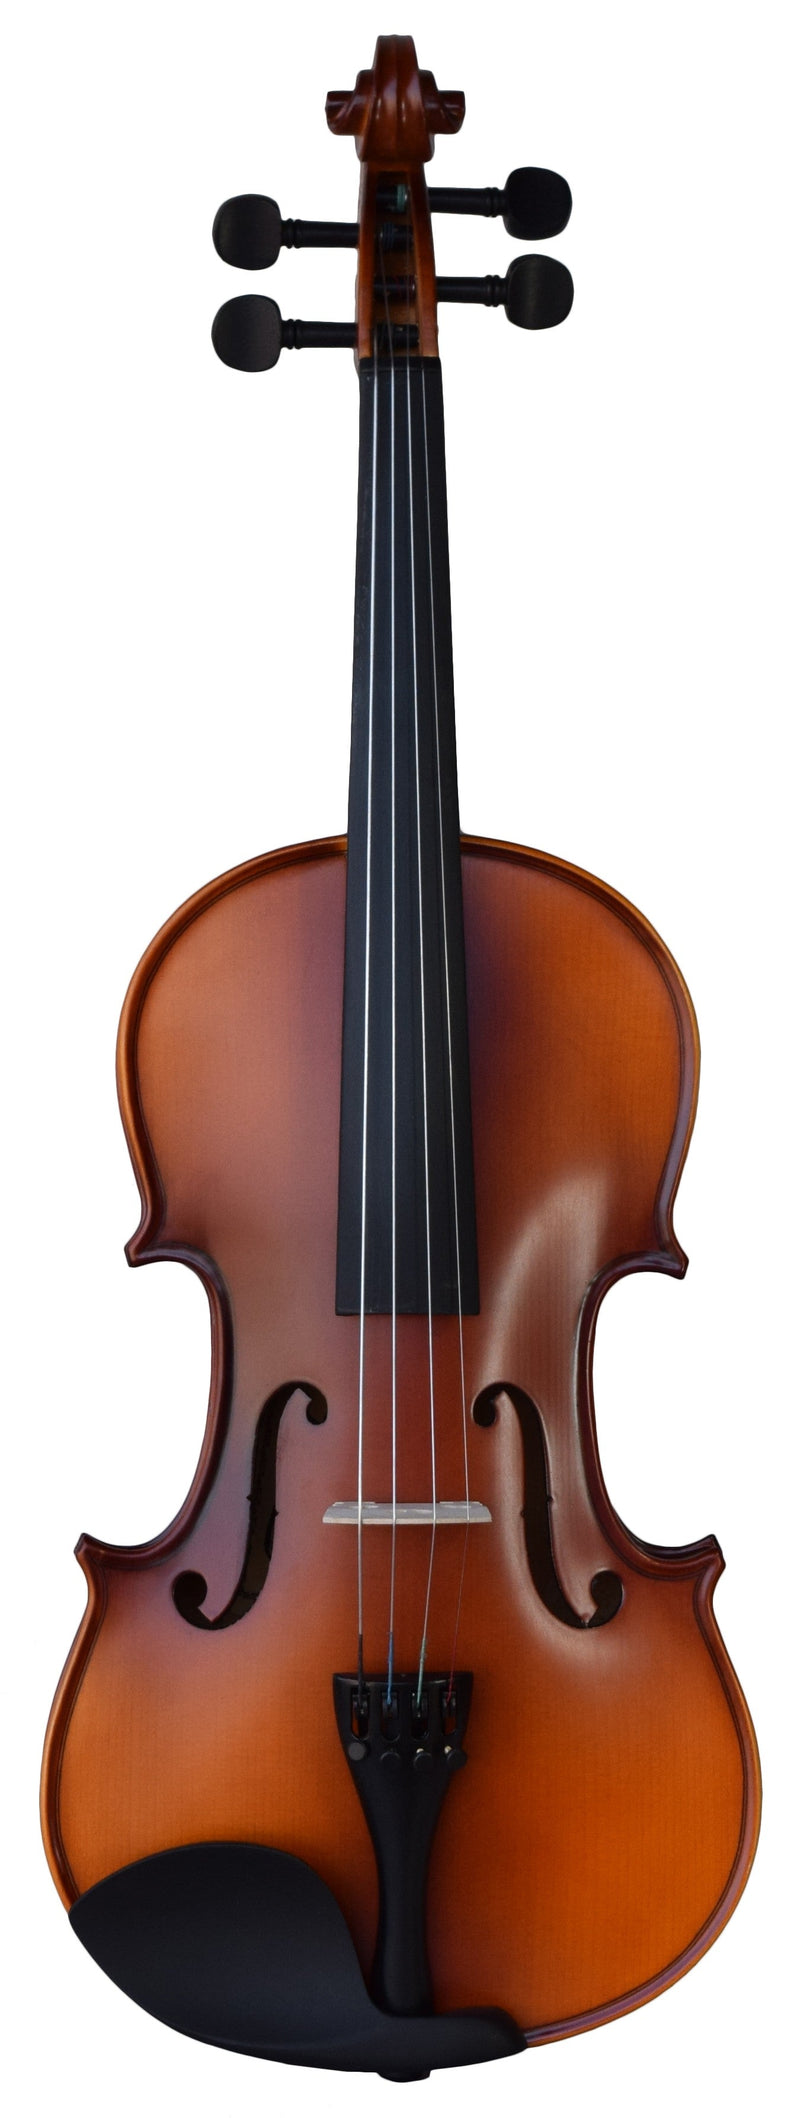 MADERA V3010 4/4 Spruce Violin In Antique Tone Madera Violin for sale canada